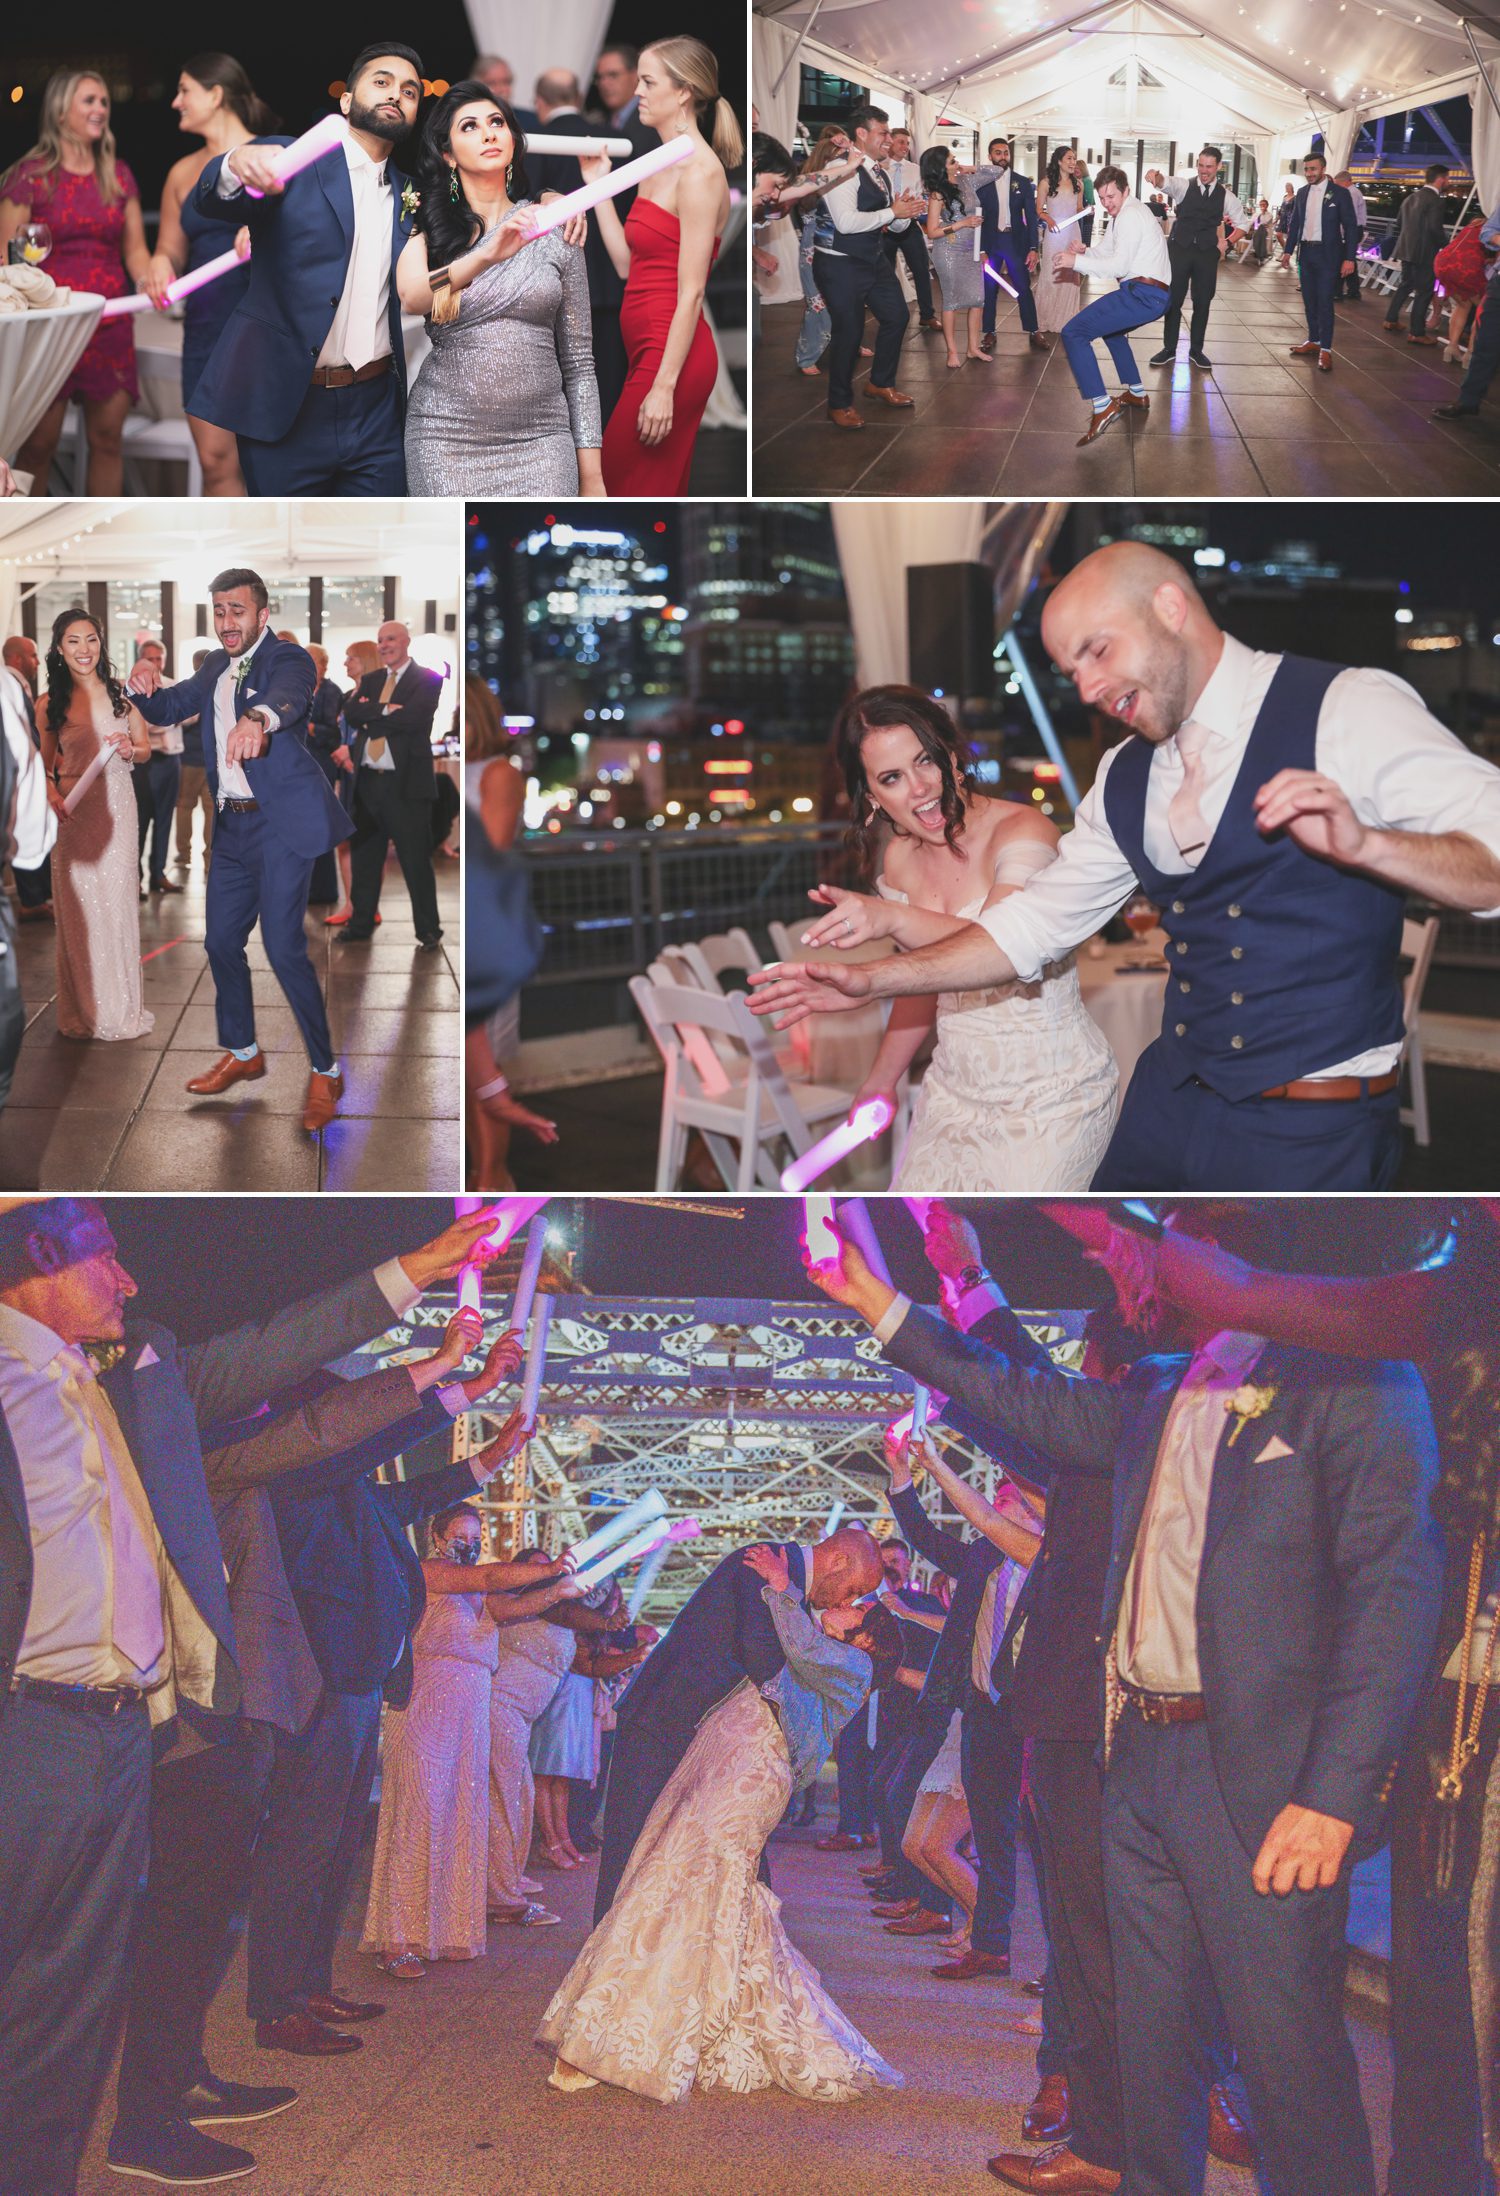 The Bridge Building Event Spaces Downtown Nashville, TN Wedding Reception Dancing